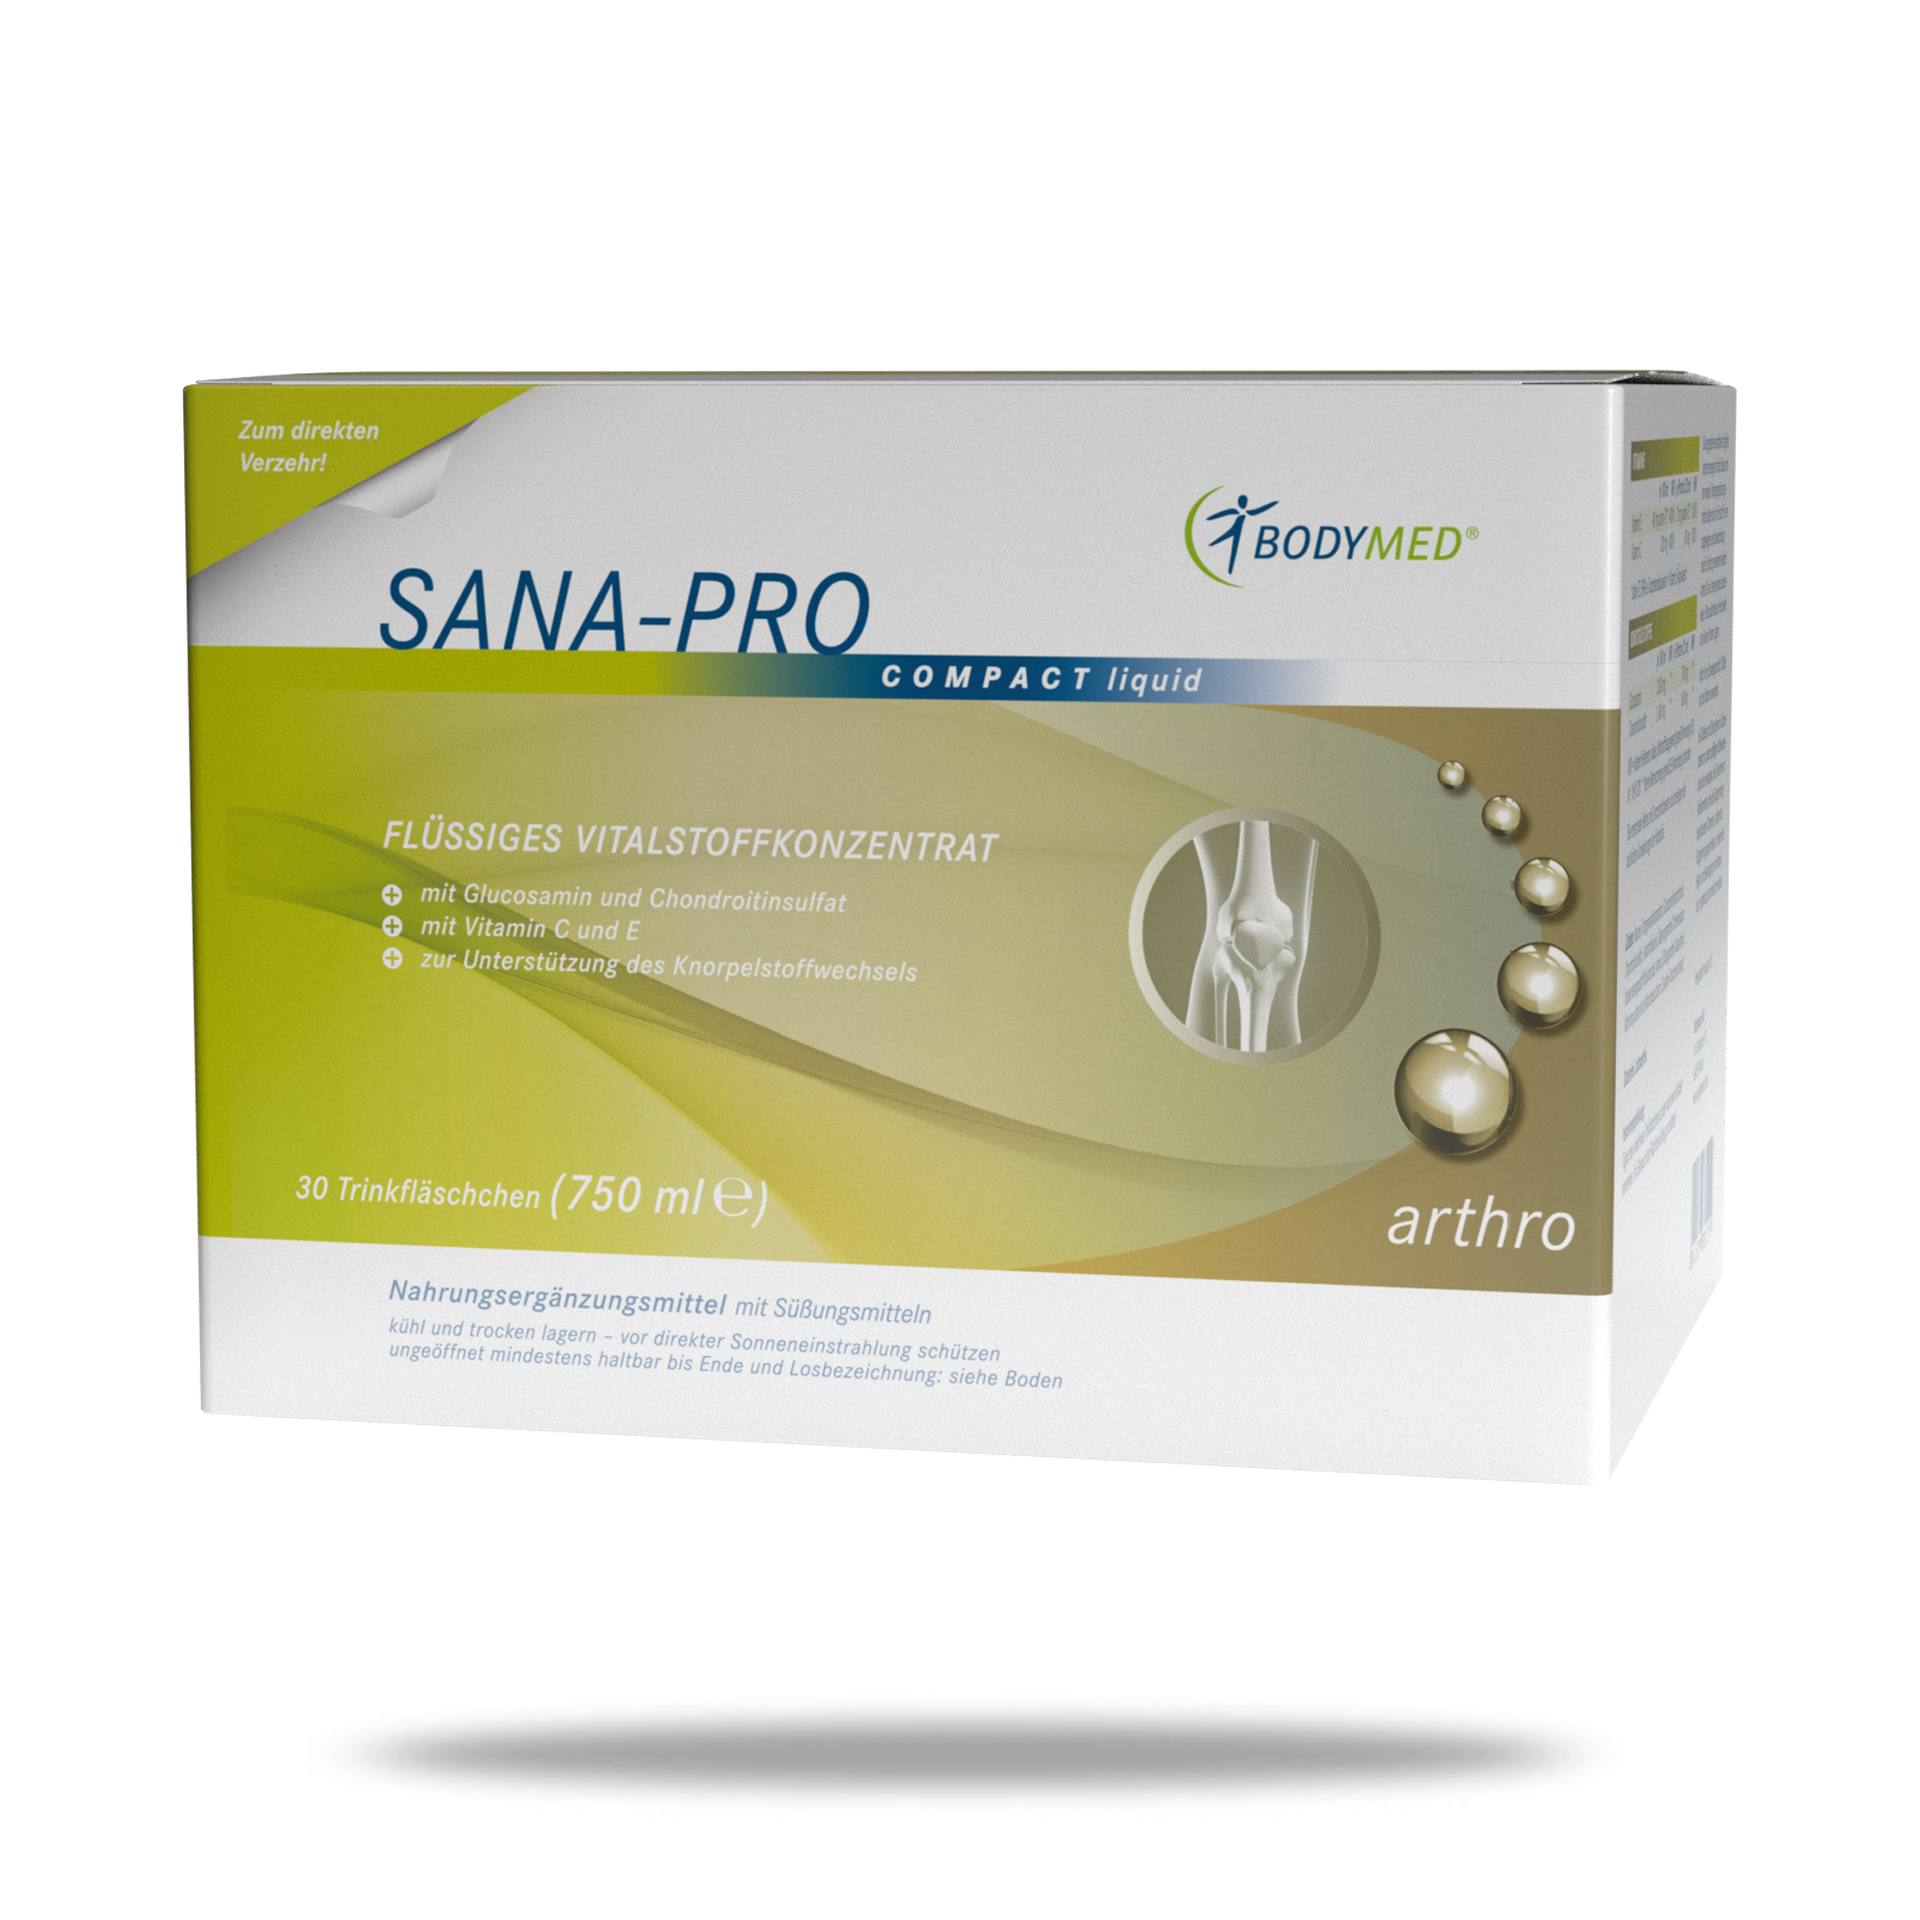 SANA-PRO COMPACT liquid arthro